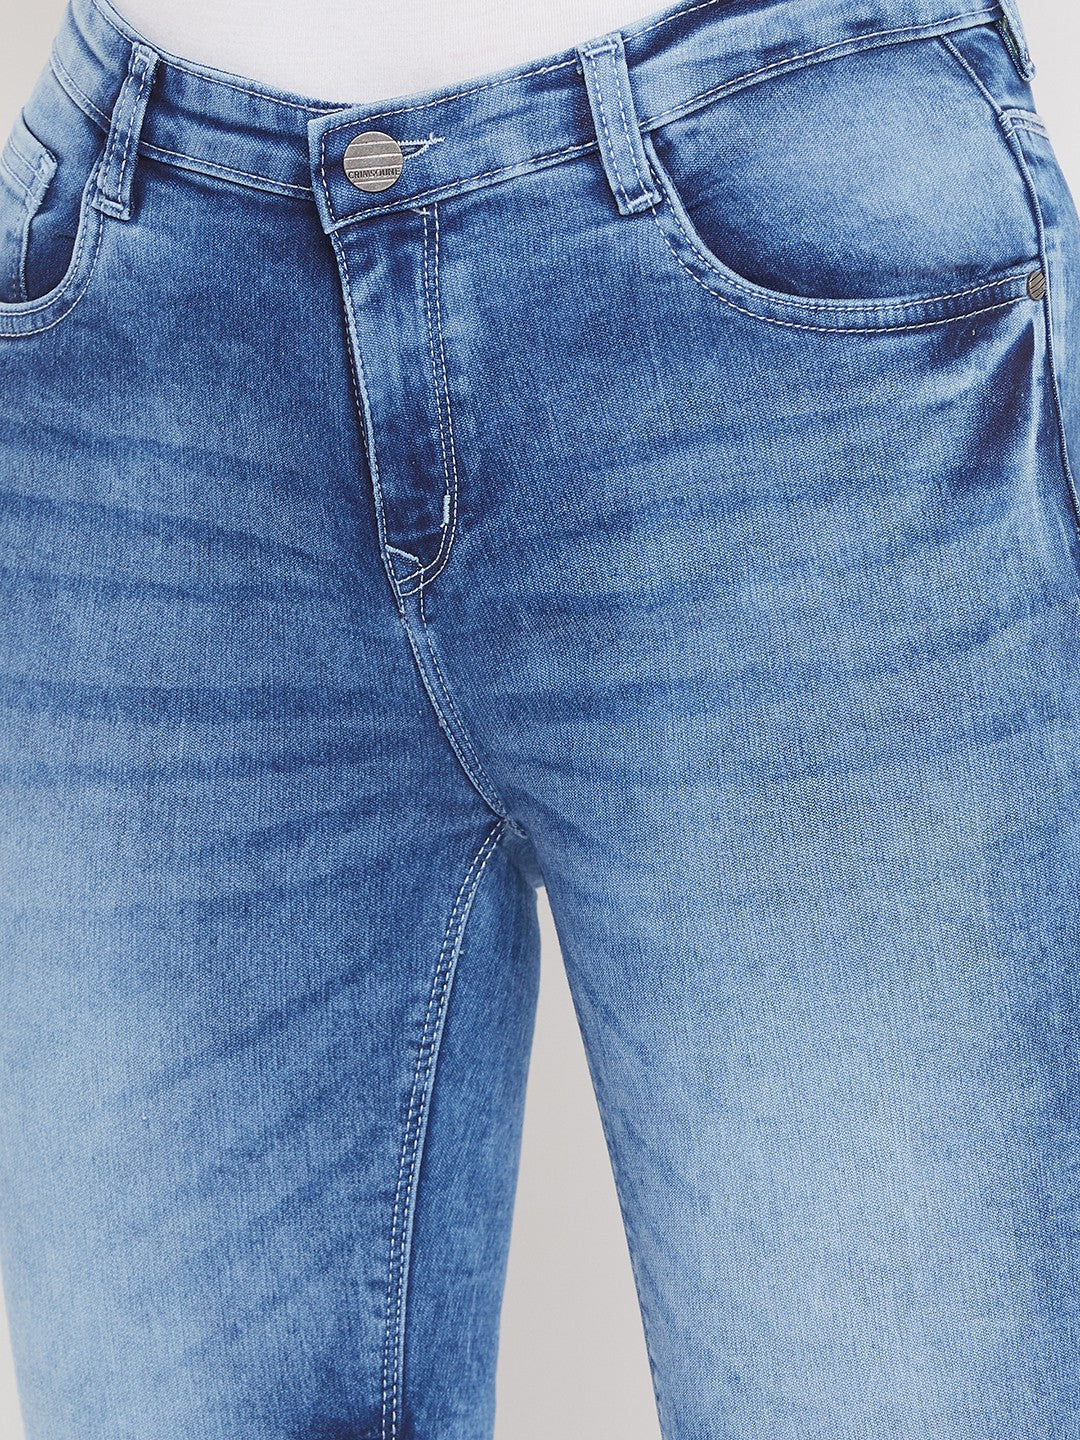 Blue Bootcut Jeans - Women Jeans